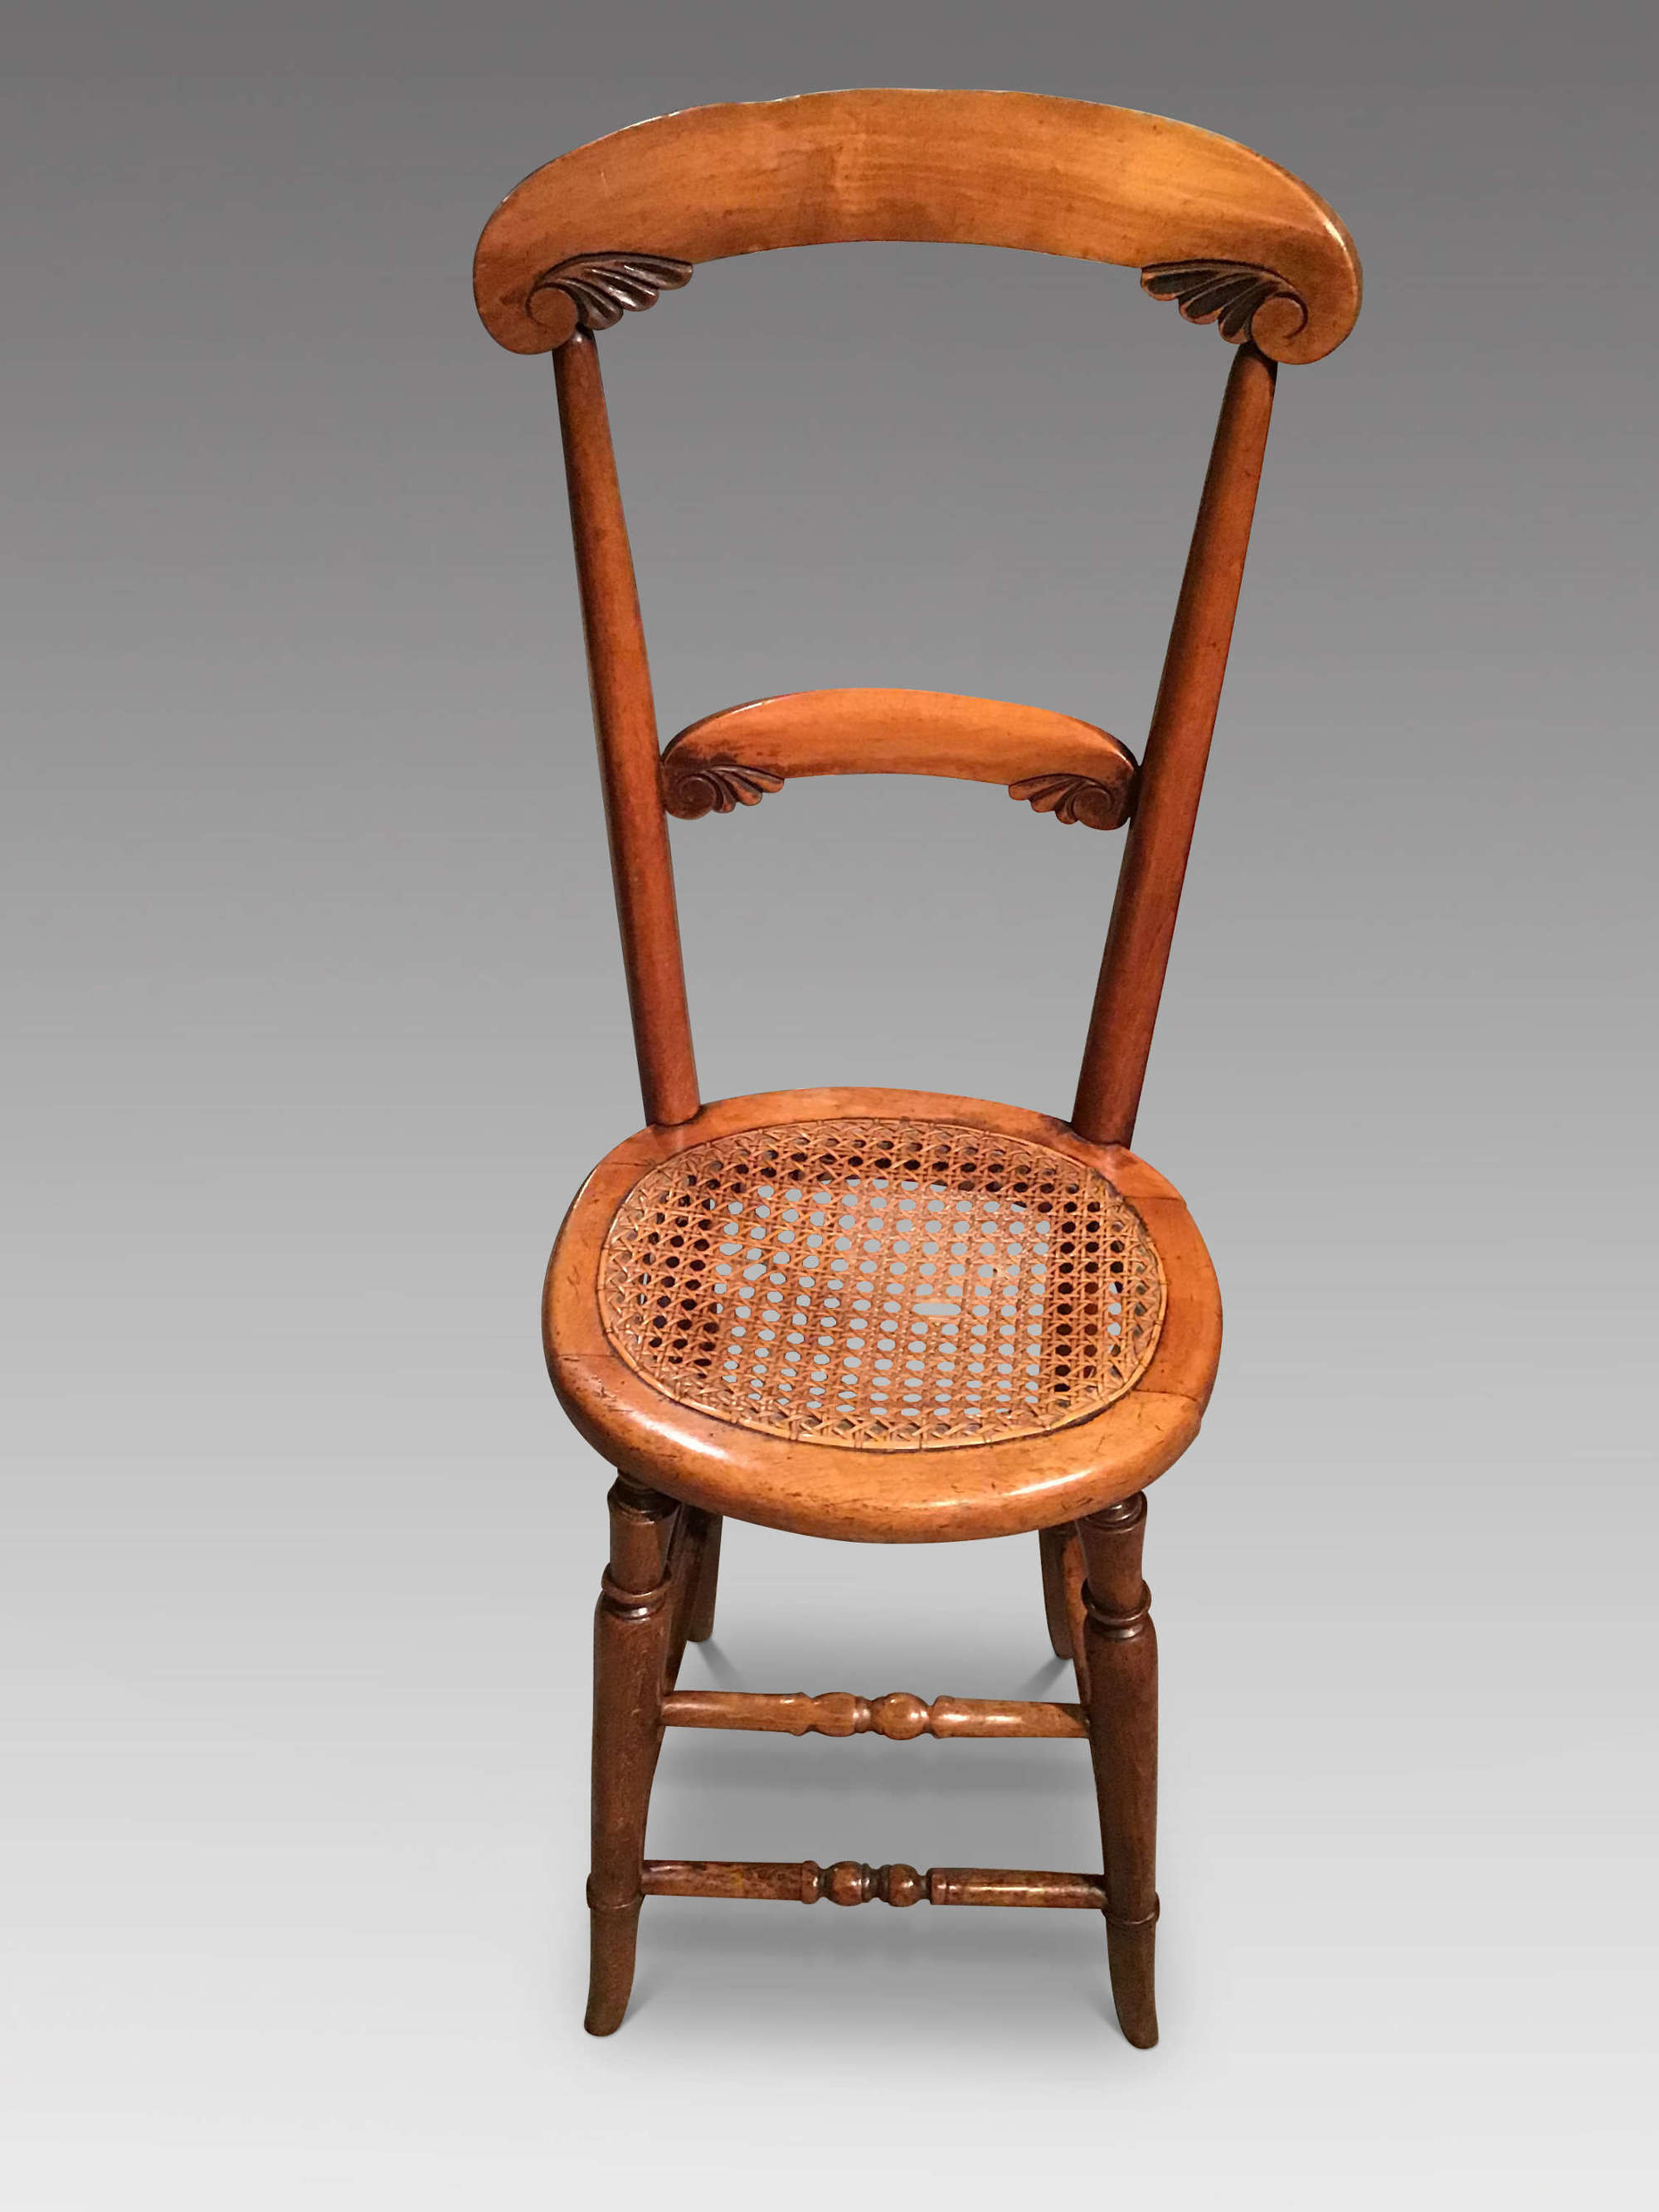 Antique correction chair